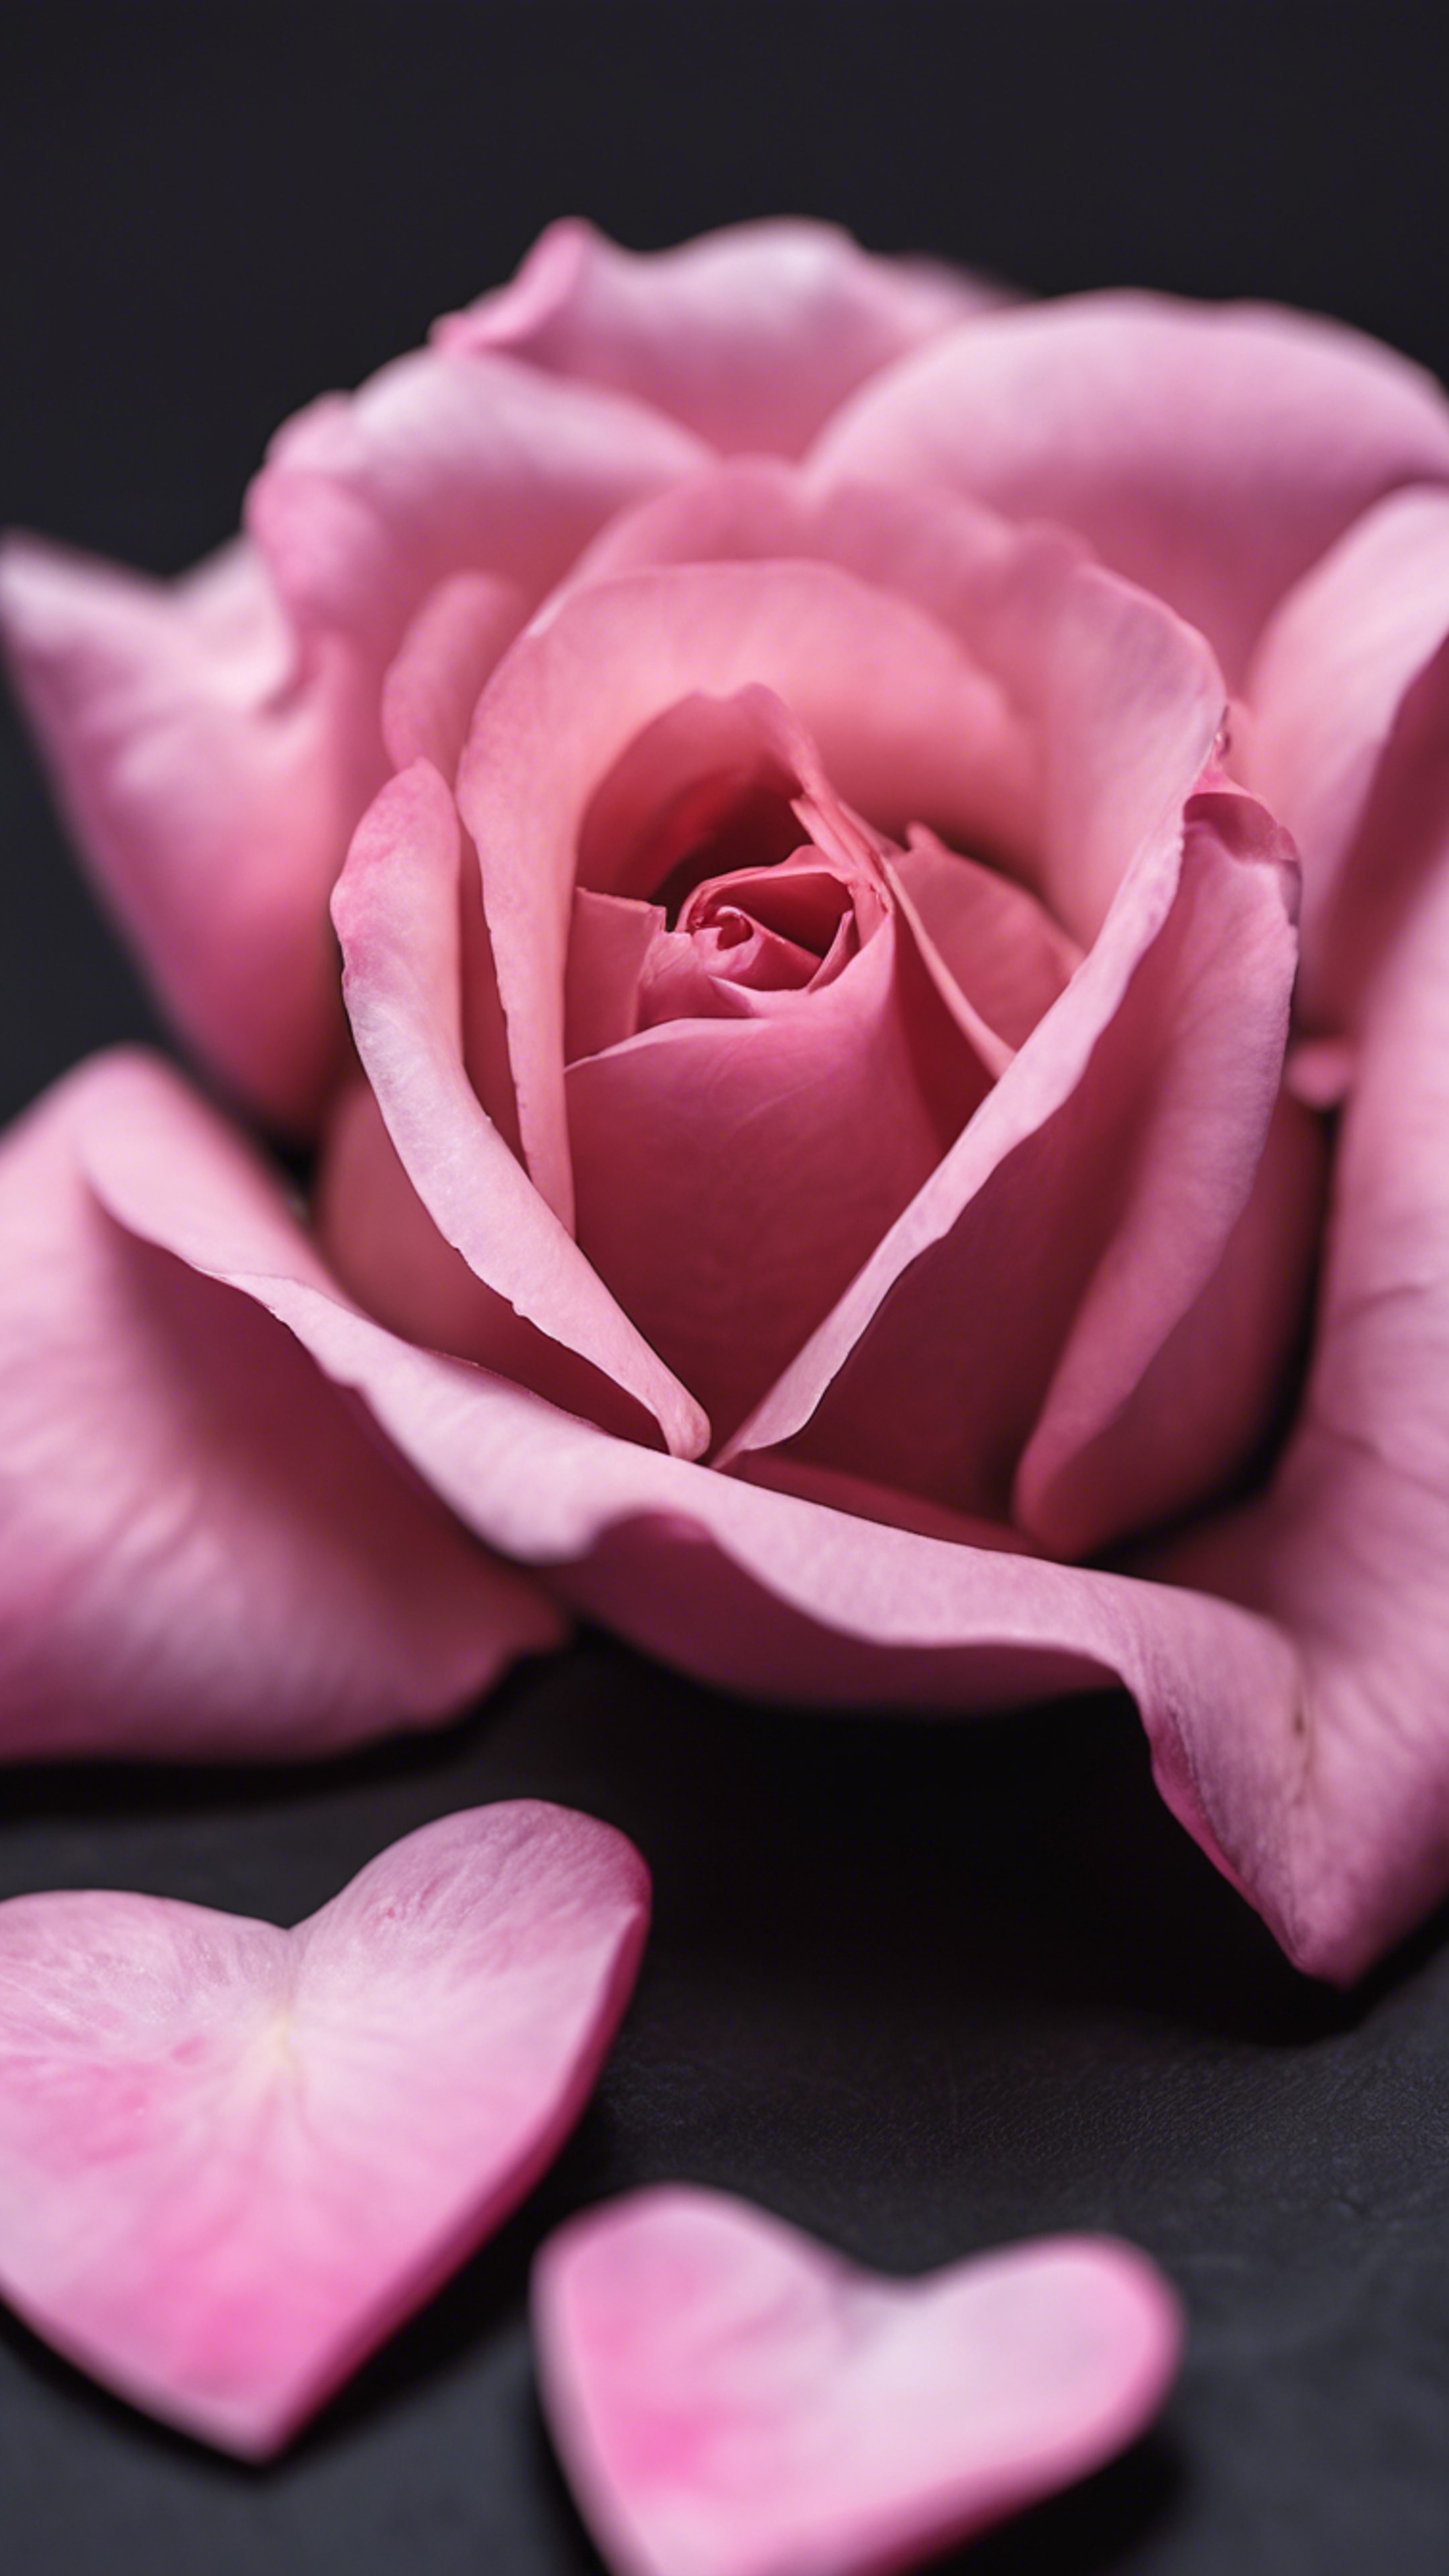 A single, perfect pink heart-shaped rose petal on a black table. Tapeta[a14a0e64e3fd4358915b]